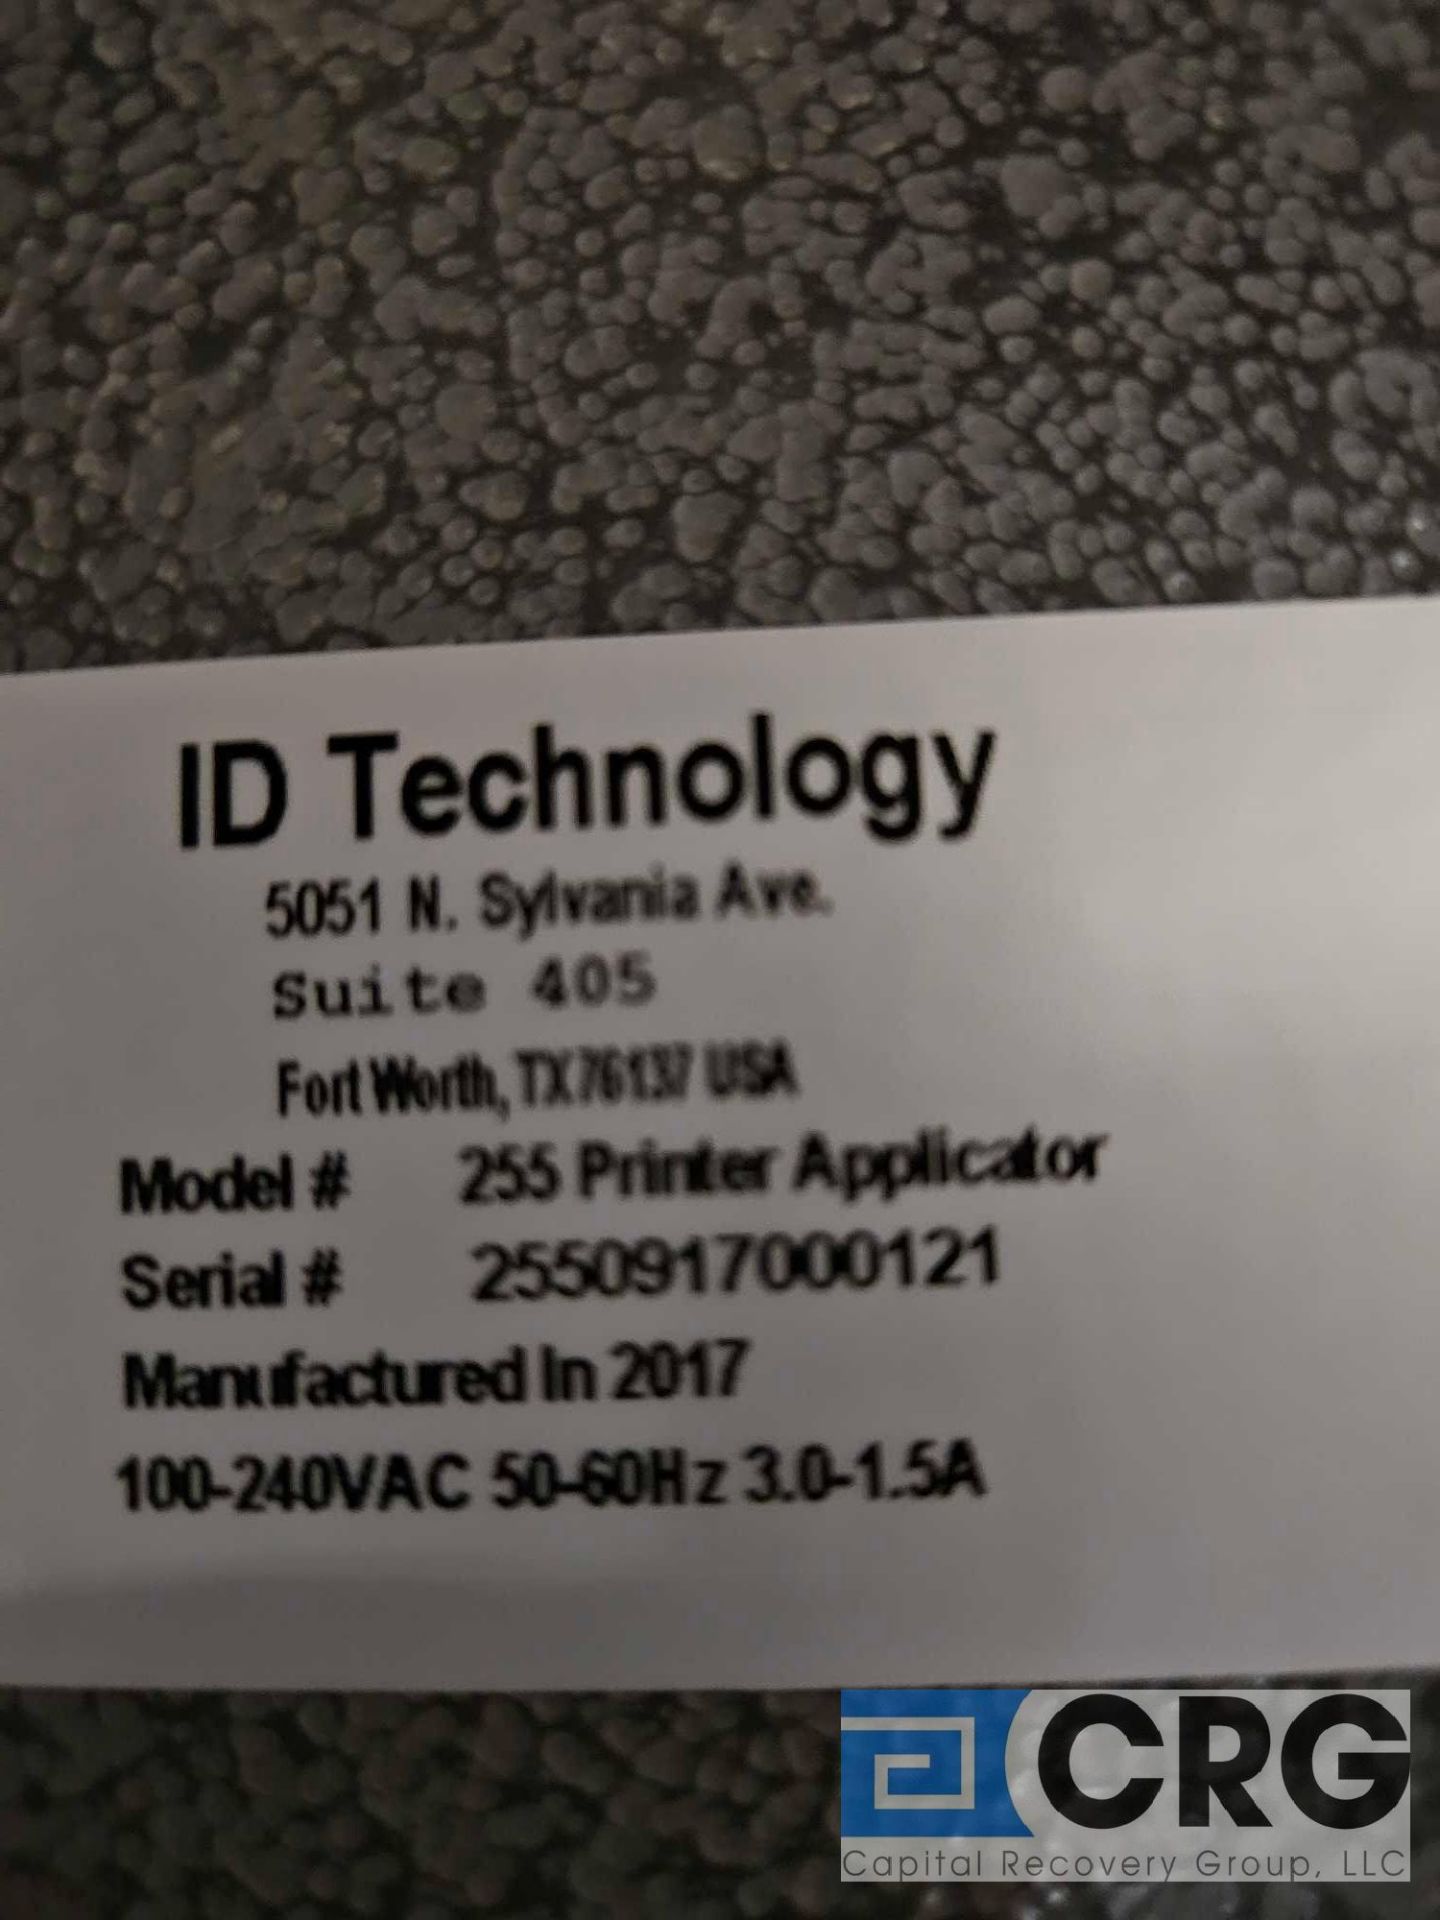 ID Technology Printer/Applicator - Image 3 of 4